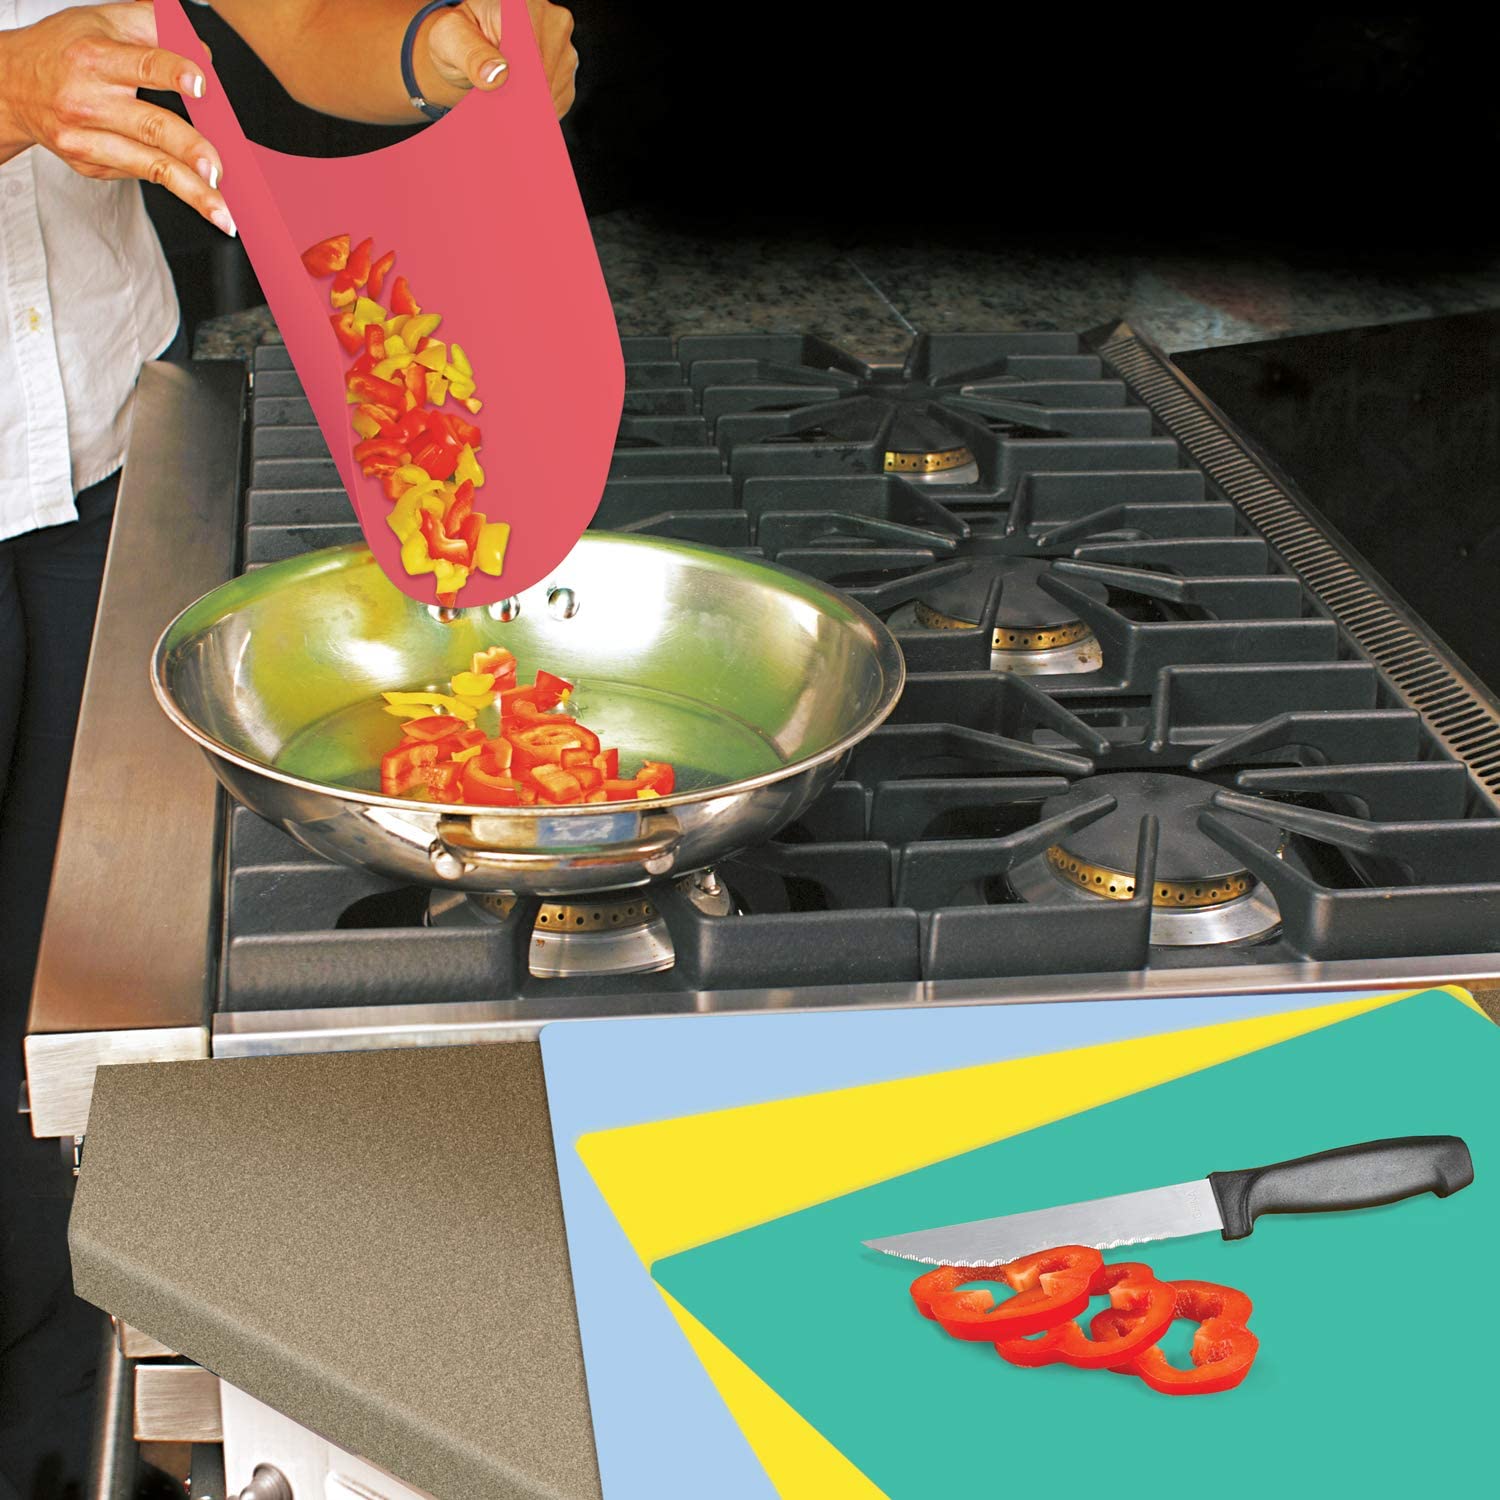 Chop Chop Cutting Mats, Flexible, Assorted Colors - 4 mats